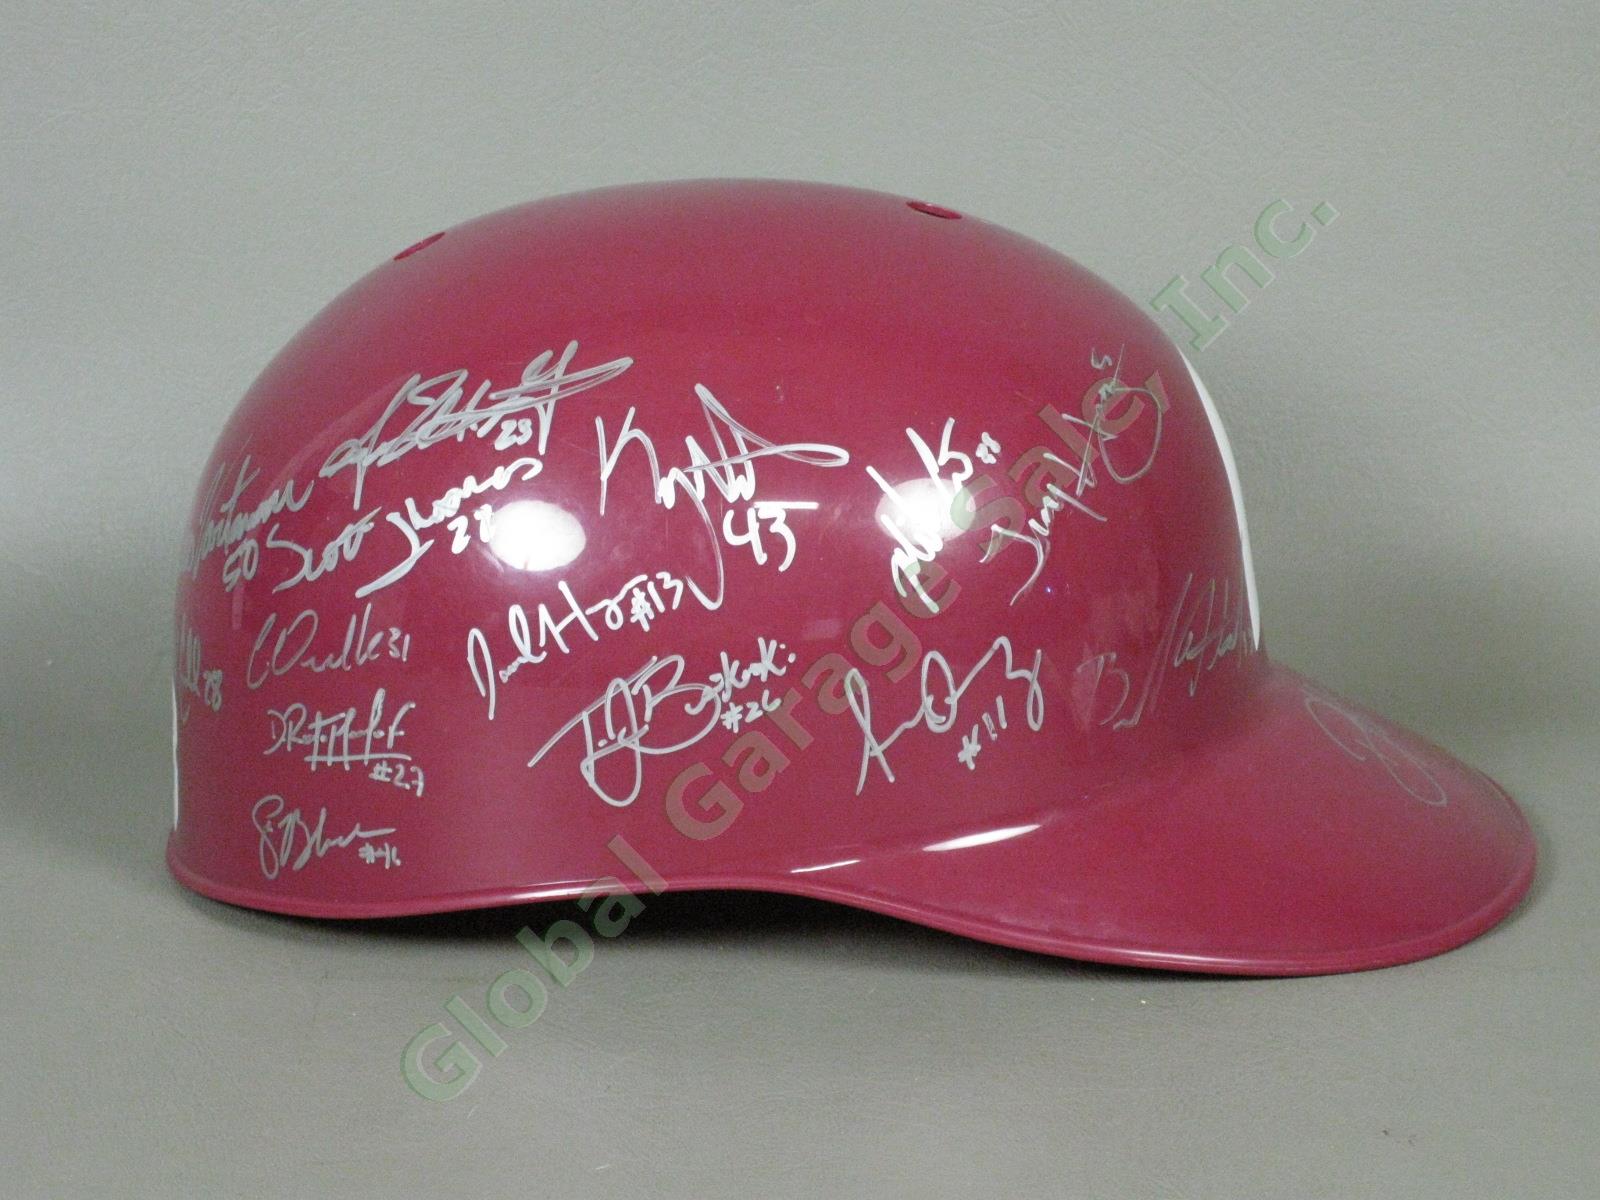 2008 Williamsport Crosscutters Team Signed Baseball Helmet Philadelphia Phillies 1